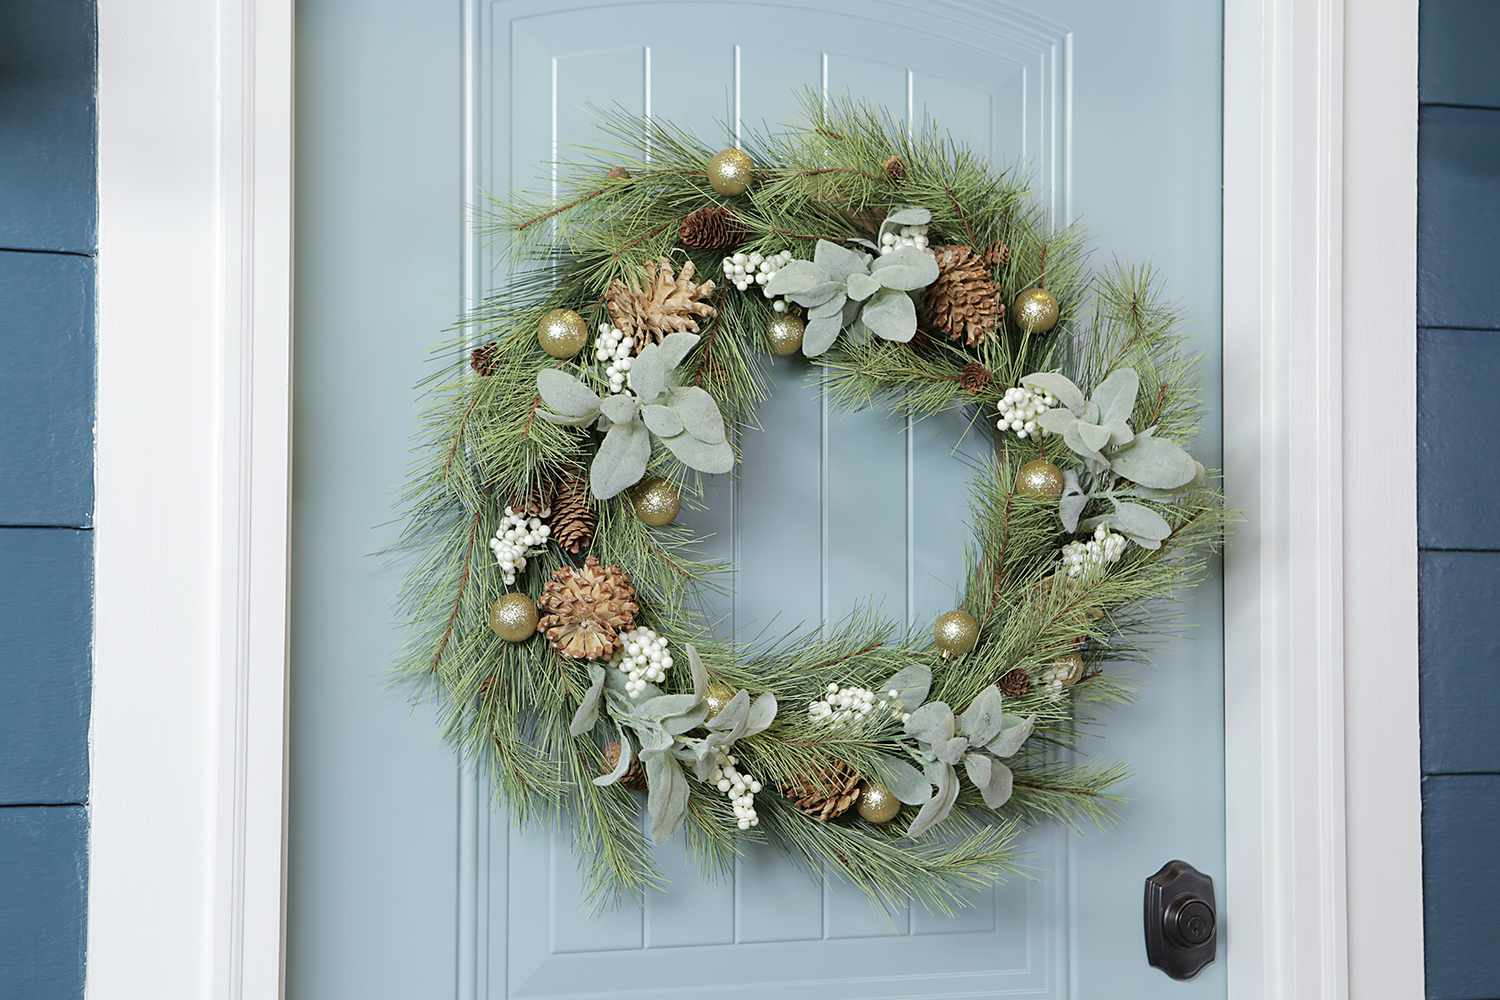 Make a Wreath from Cardboard